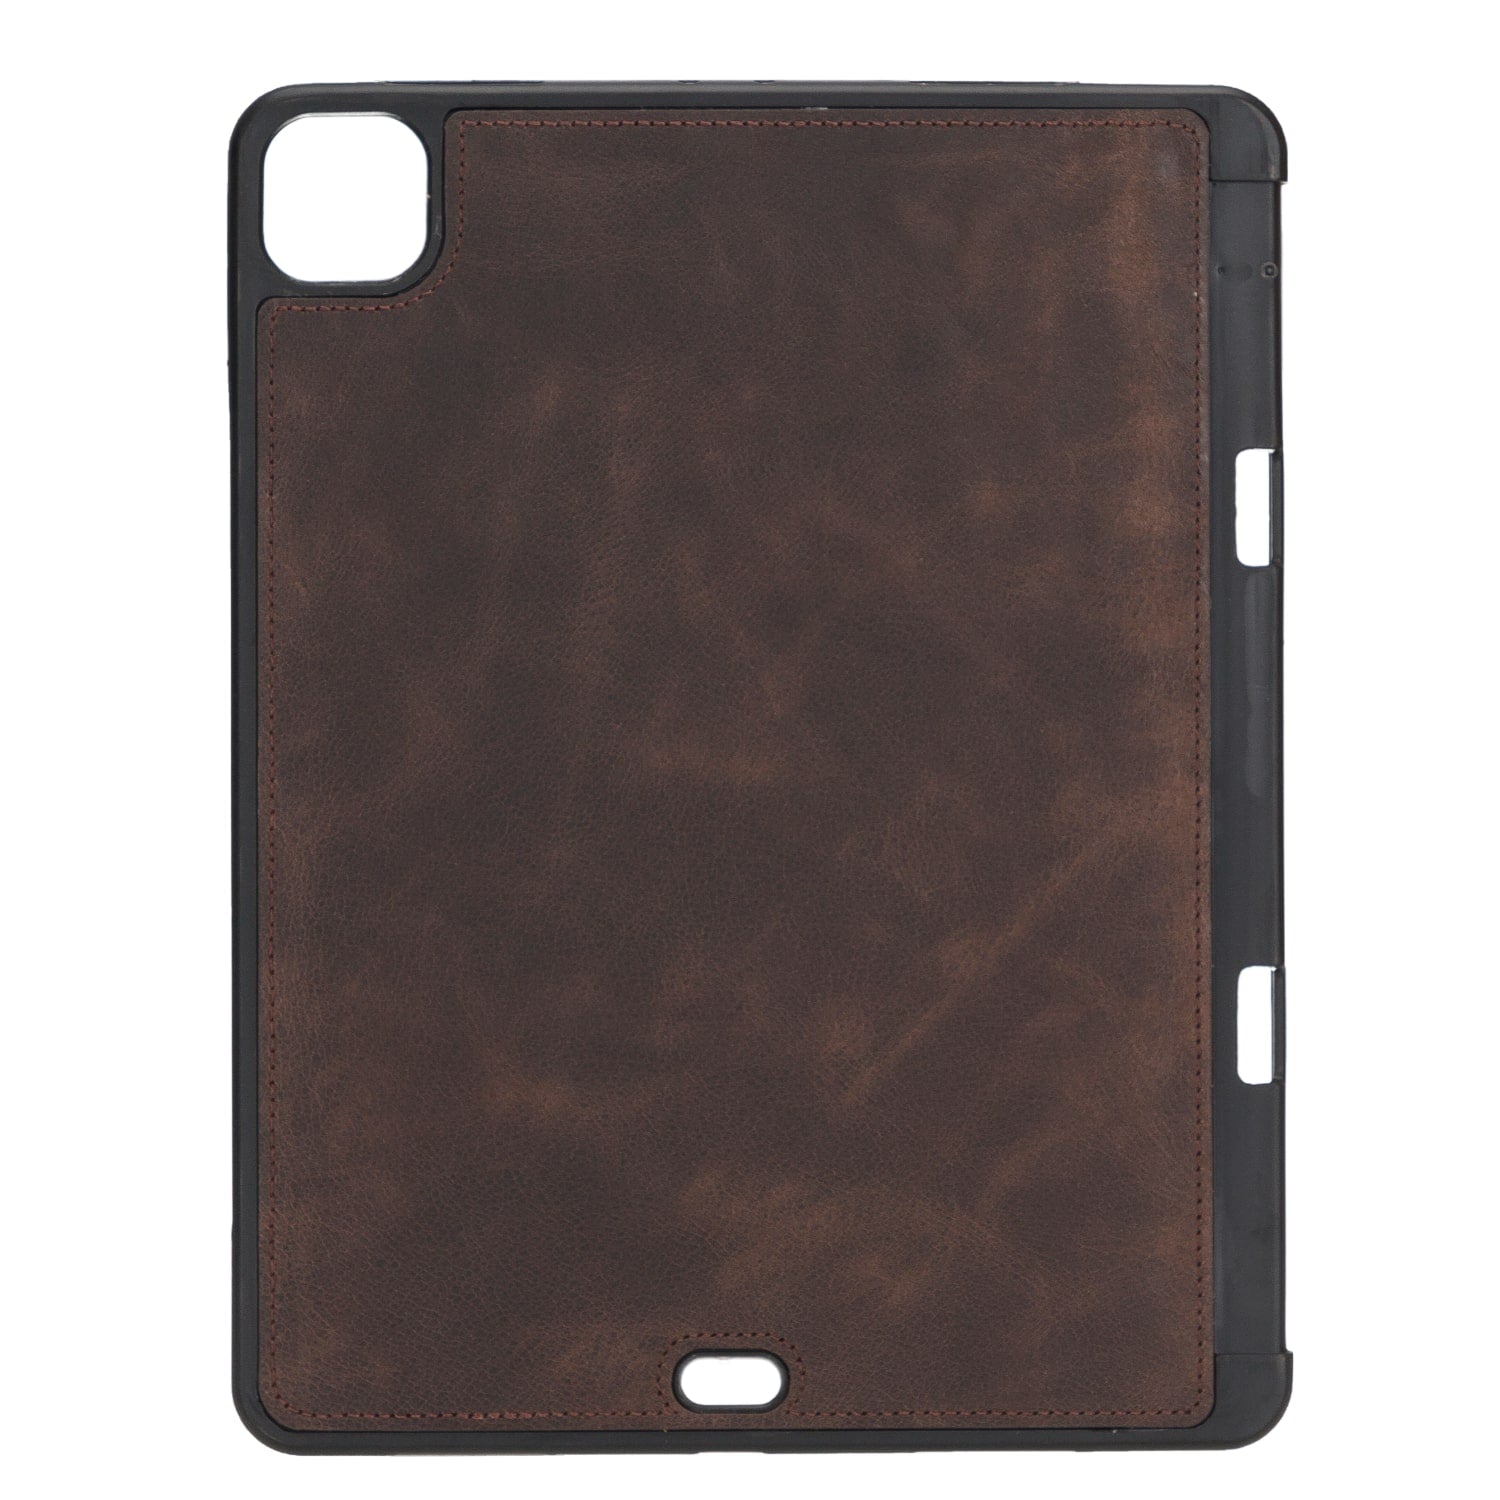 Tan Brown Leather iPad Air 10.9 Inc Smart Folio Case with Apple Pen Holder - Bomonti - 5